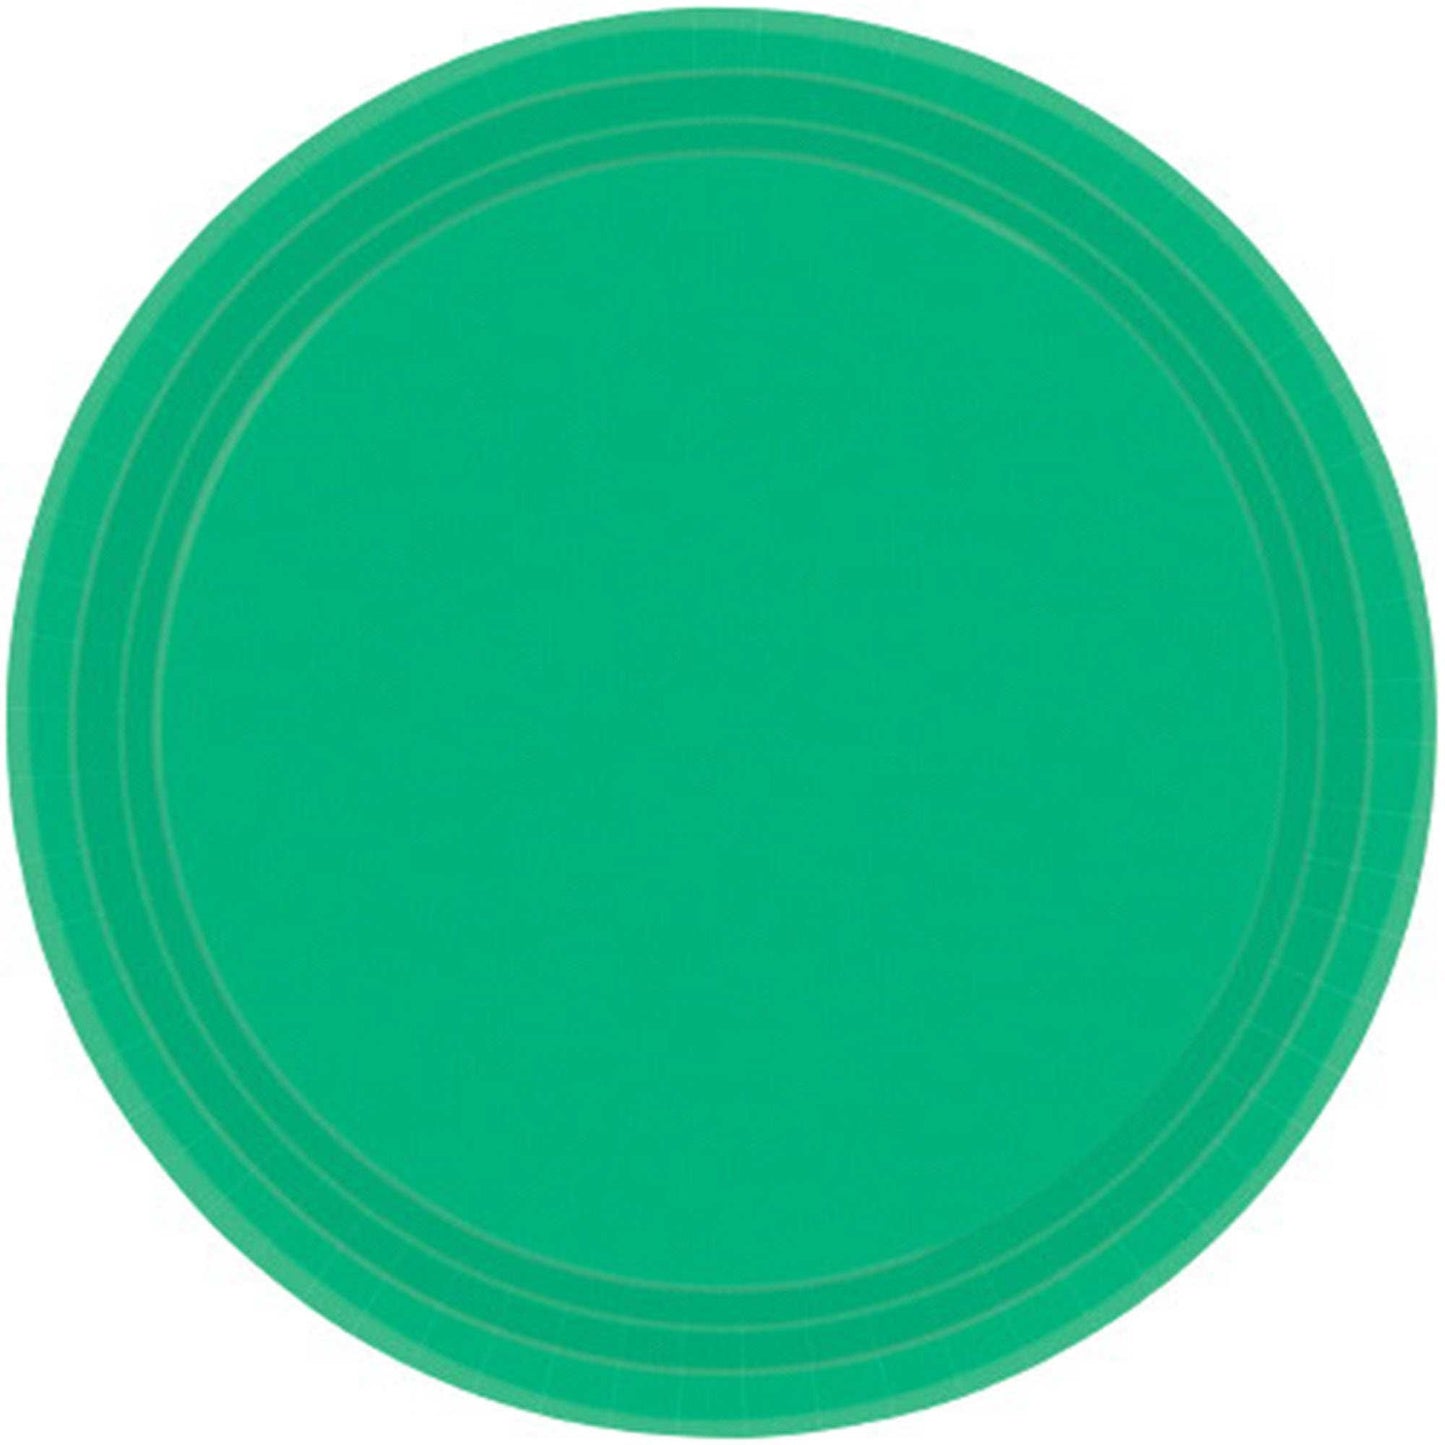 Paper Plates 17cm Round 20CT FSC - Festive Green NPC